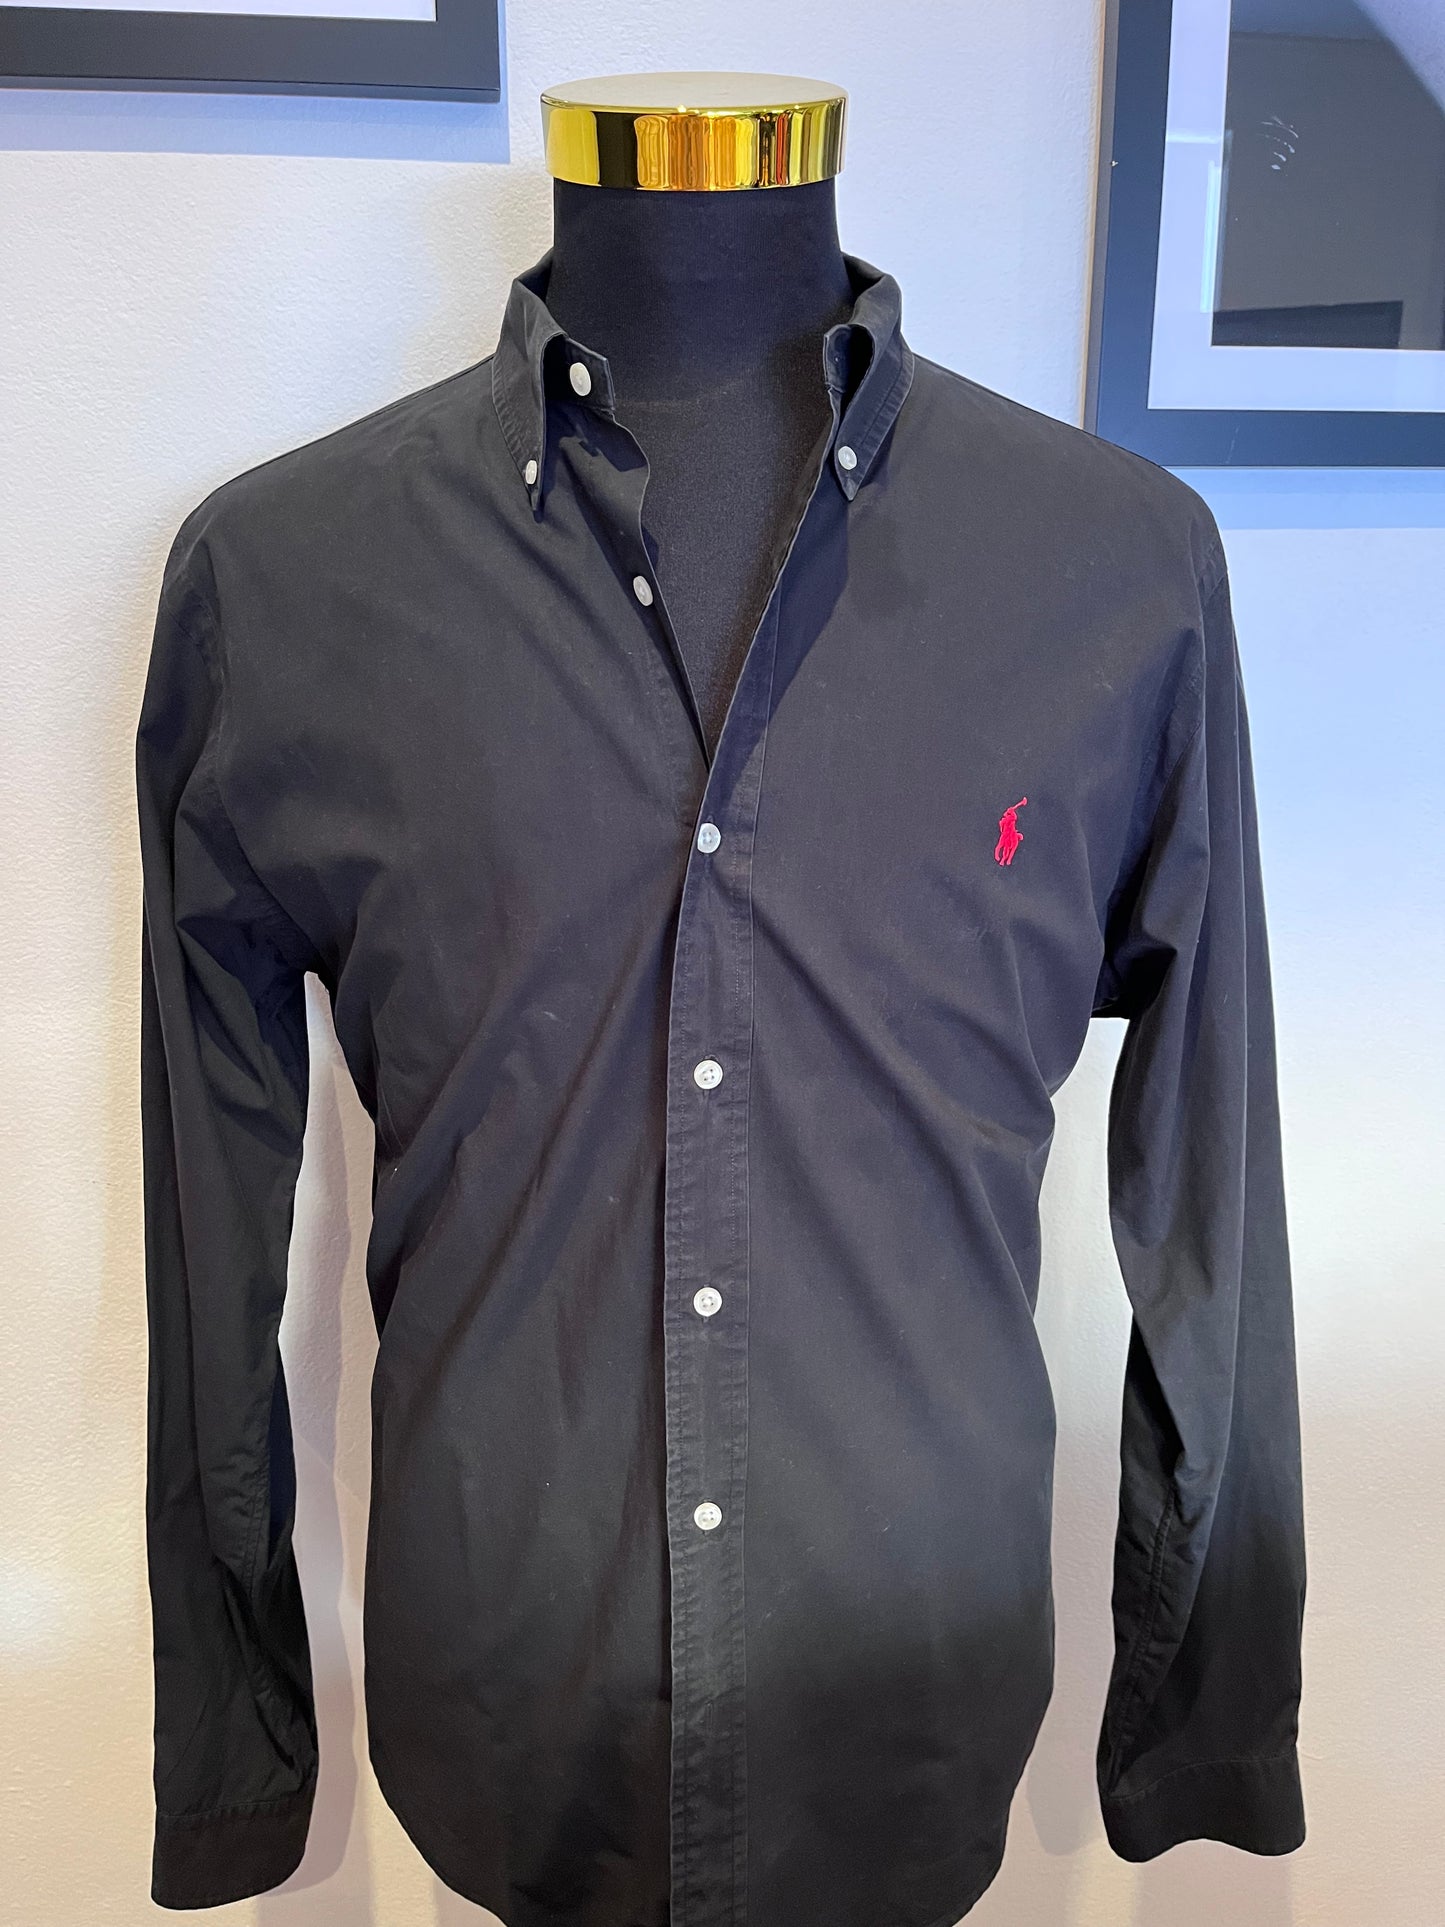 Ralph Lauren 100% Stretch Cotton Black Slim Fit Shirt Size XL fits more like a Large